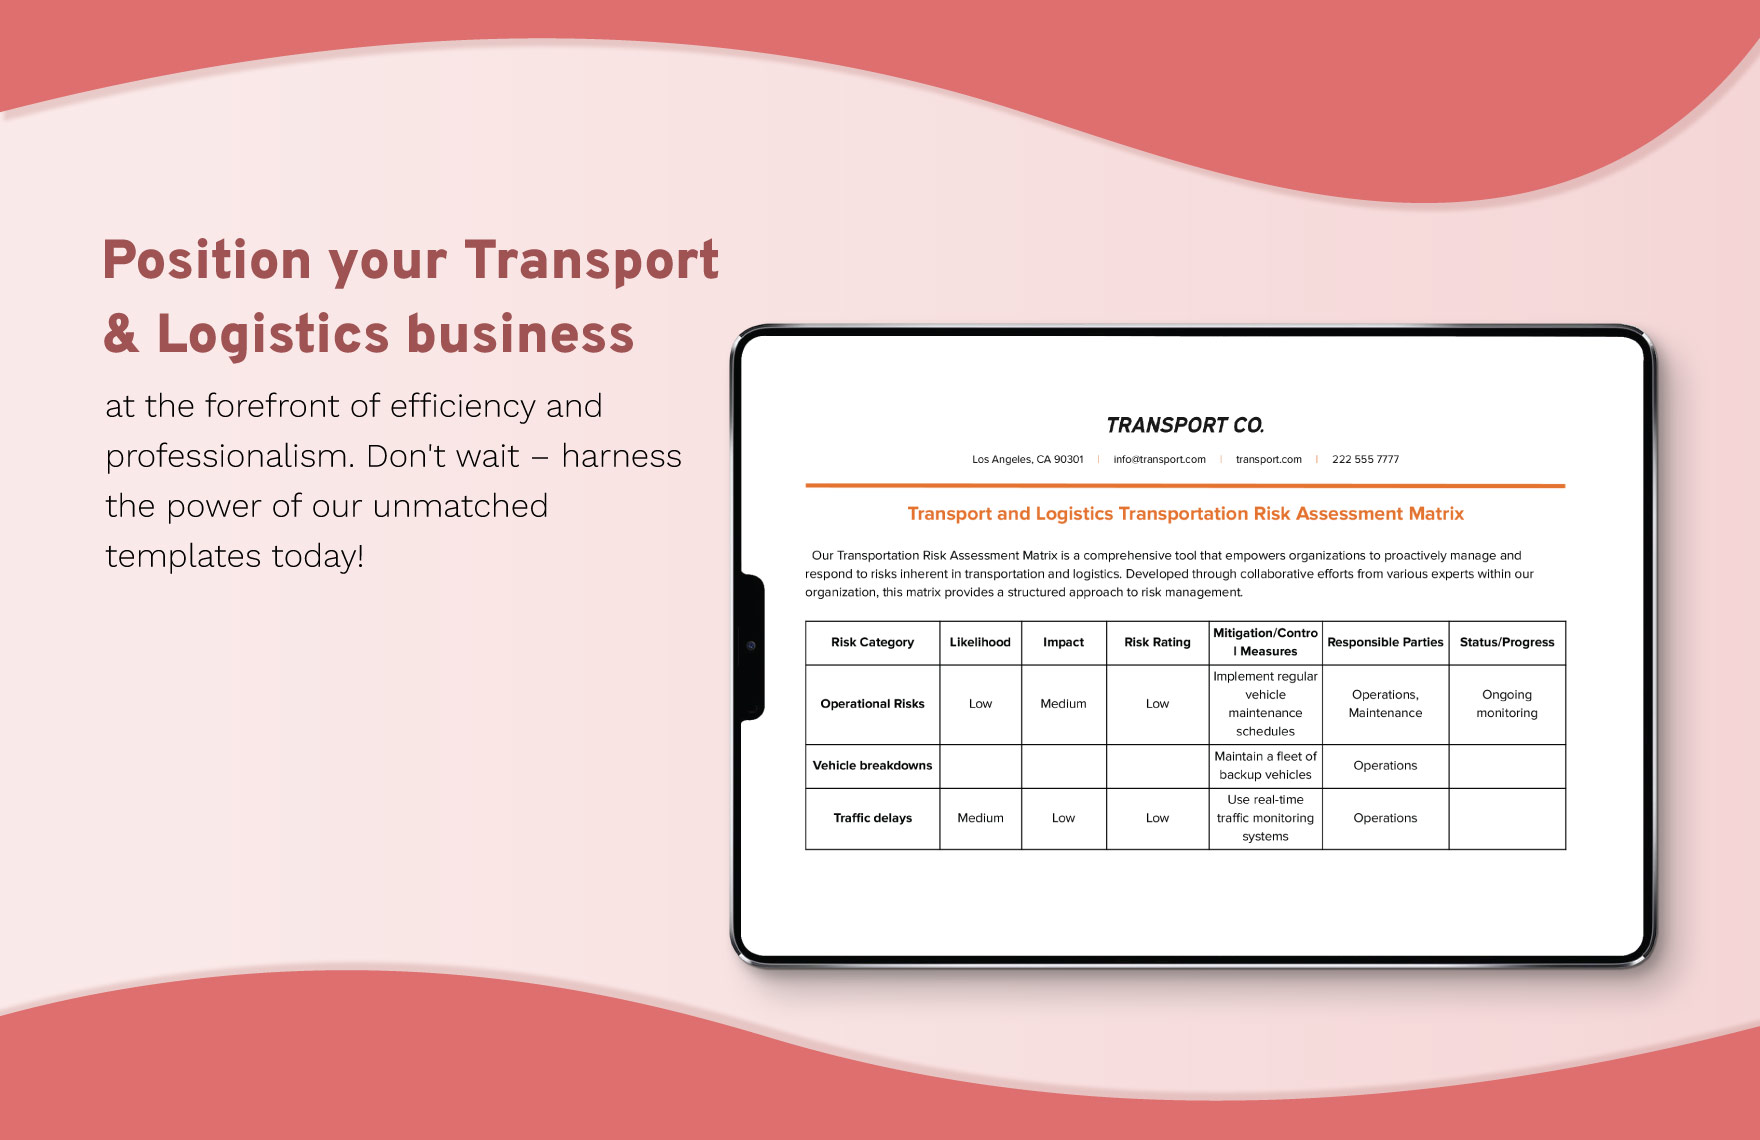 Transport and Logistics Transportation Risk Assessment Matrix Template